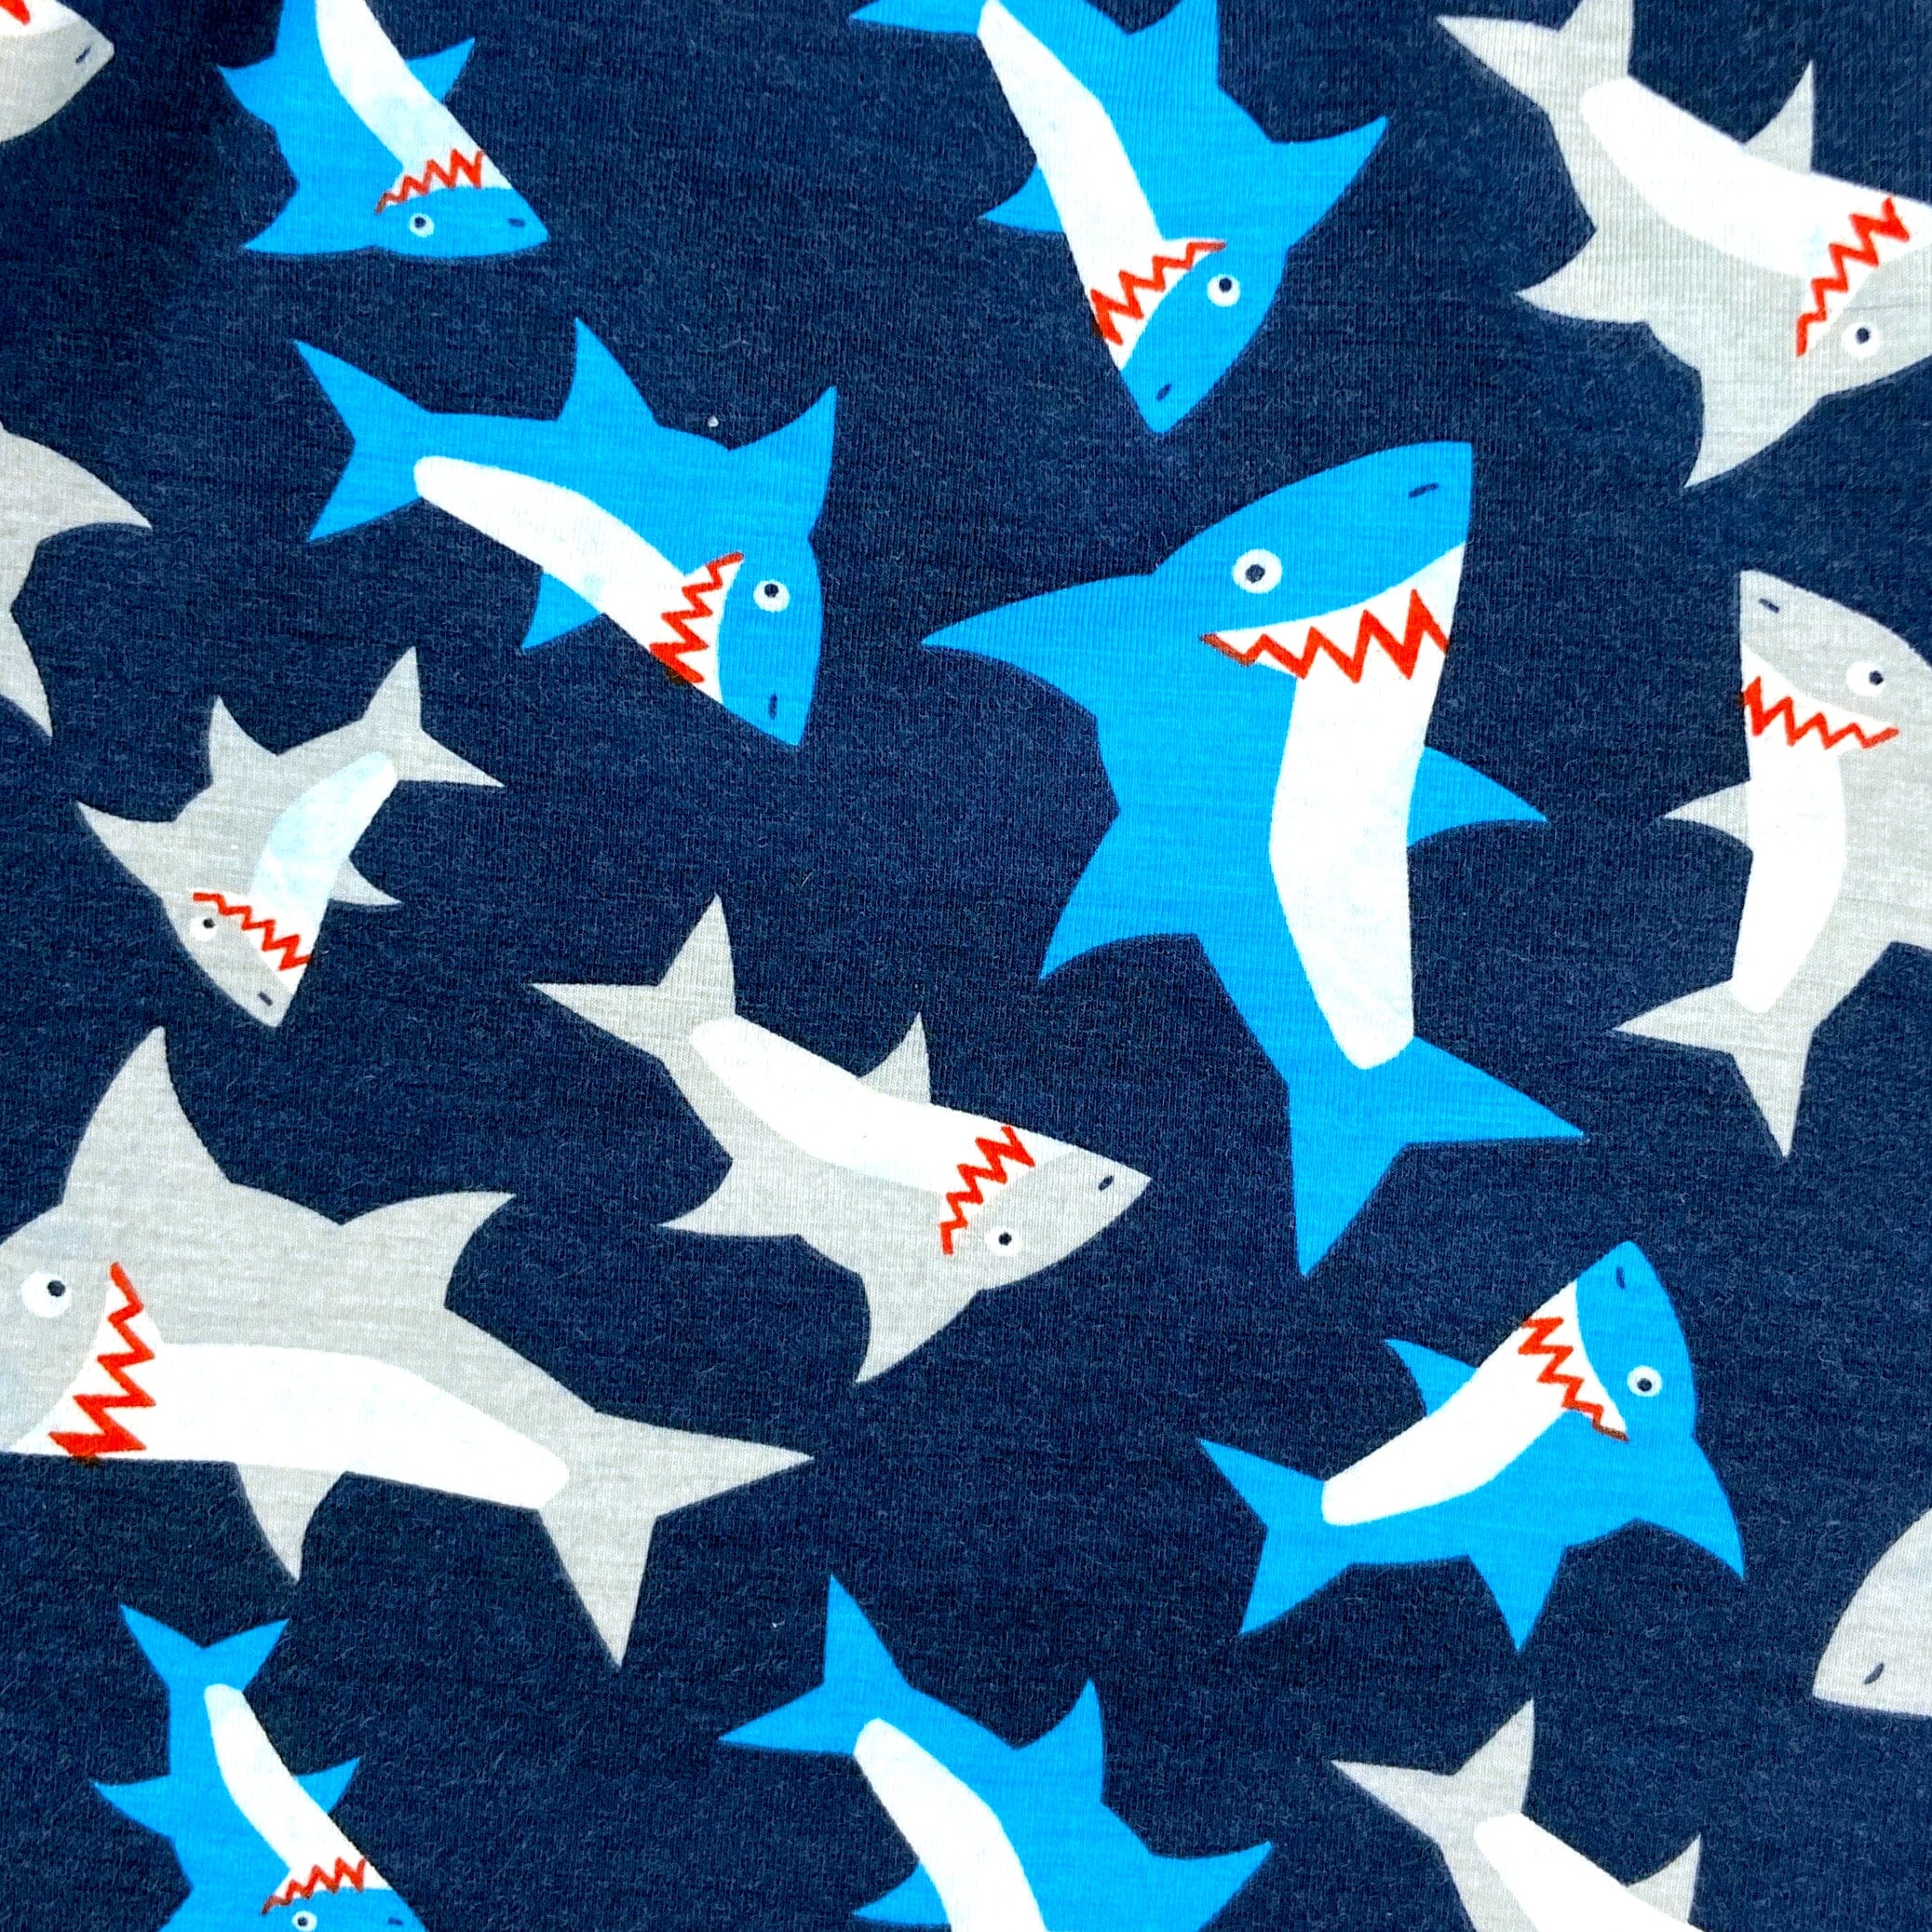 Men's Smiley Shark Novelty Print Cotton Boxer Pajama Sleep Shorts